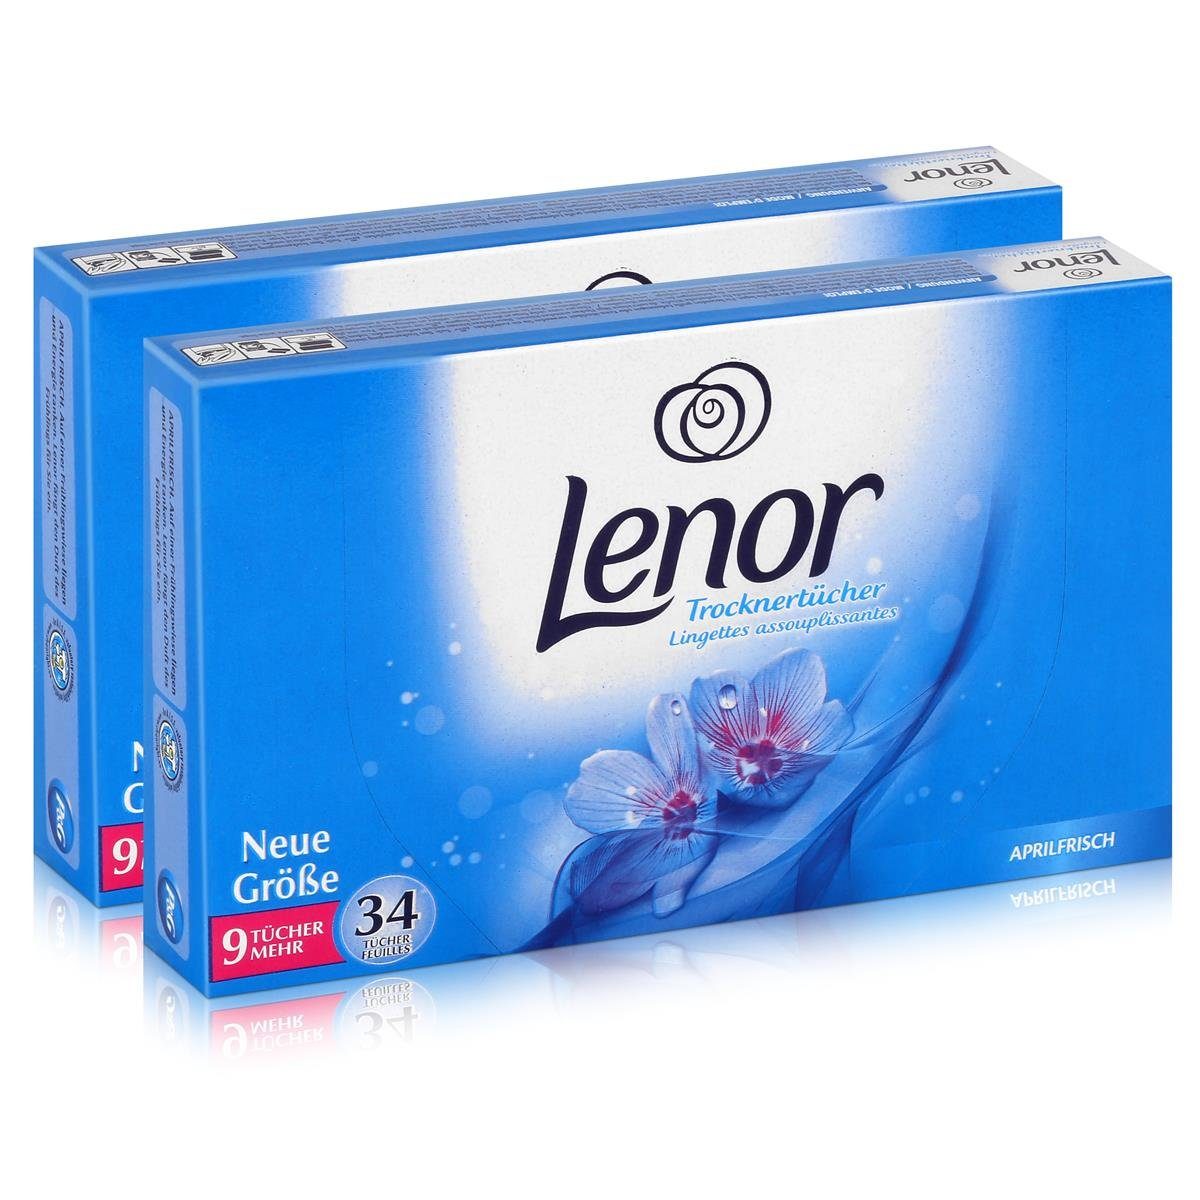 LENOR Lenor Trocknertücher Aprilfrisch 34 Tücher - Wäschepflege im Trockner Spezialwaschmittel | Waschmittel